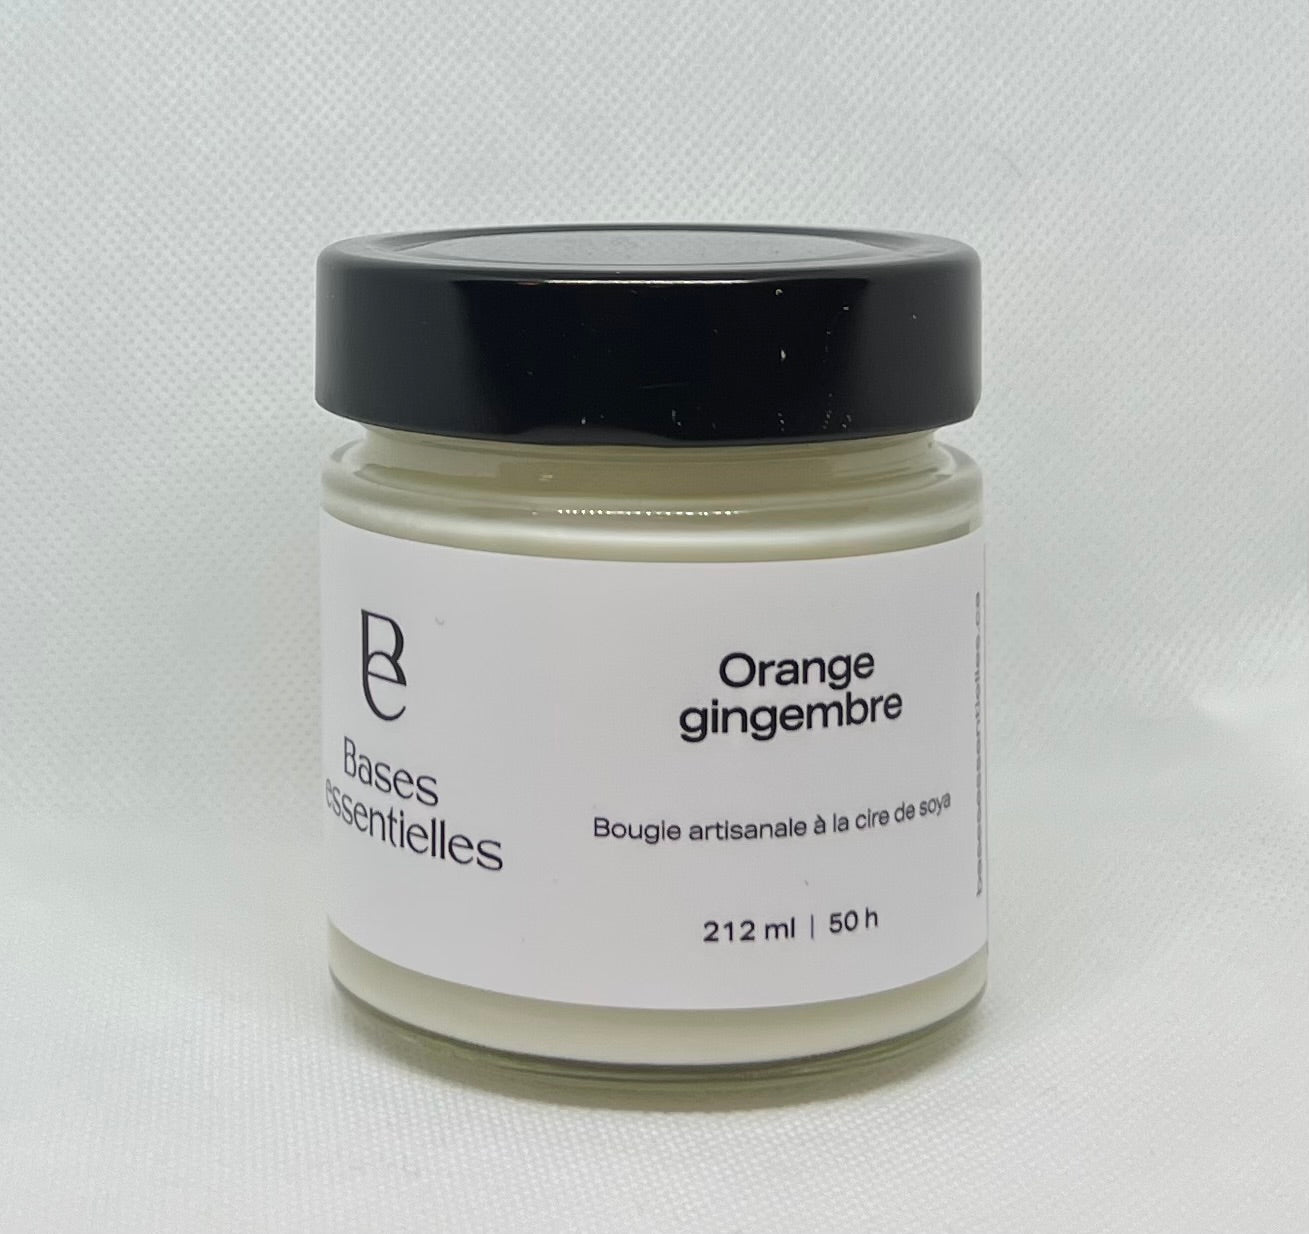 Bougie orange gingembre